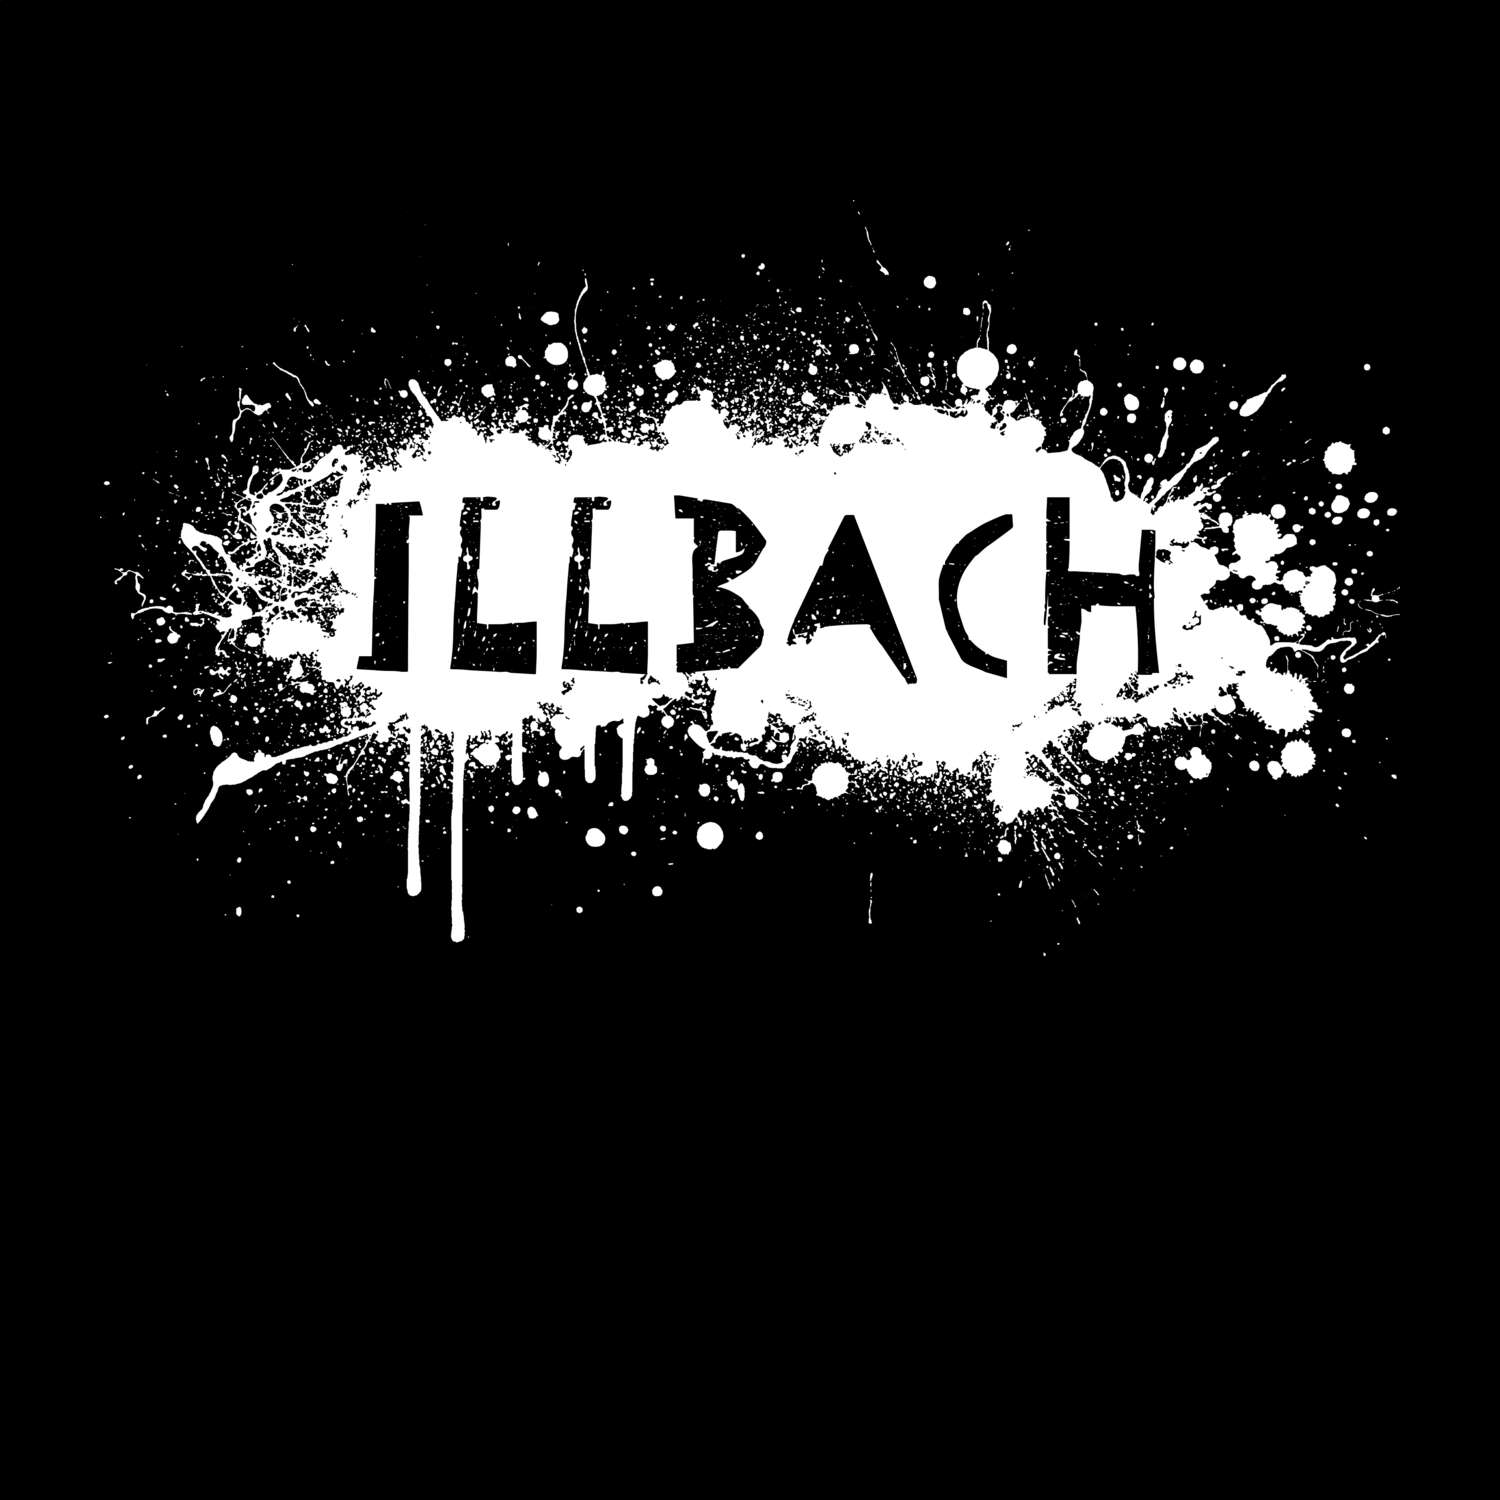 Illbach T-Shirt »Paint Splash Punk«